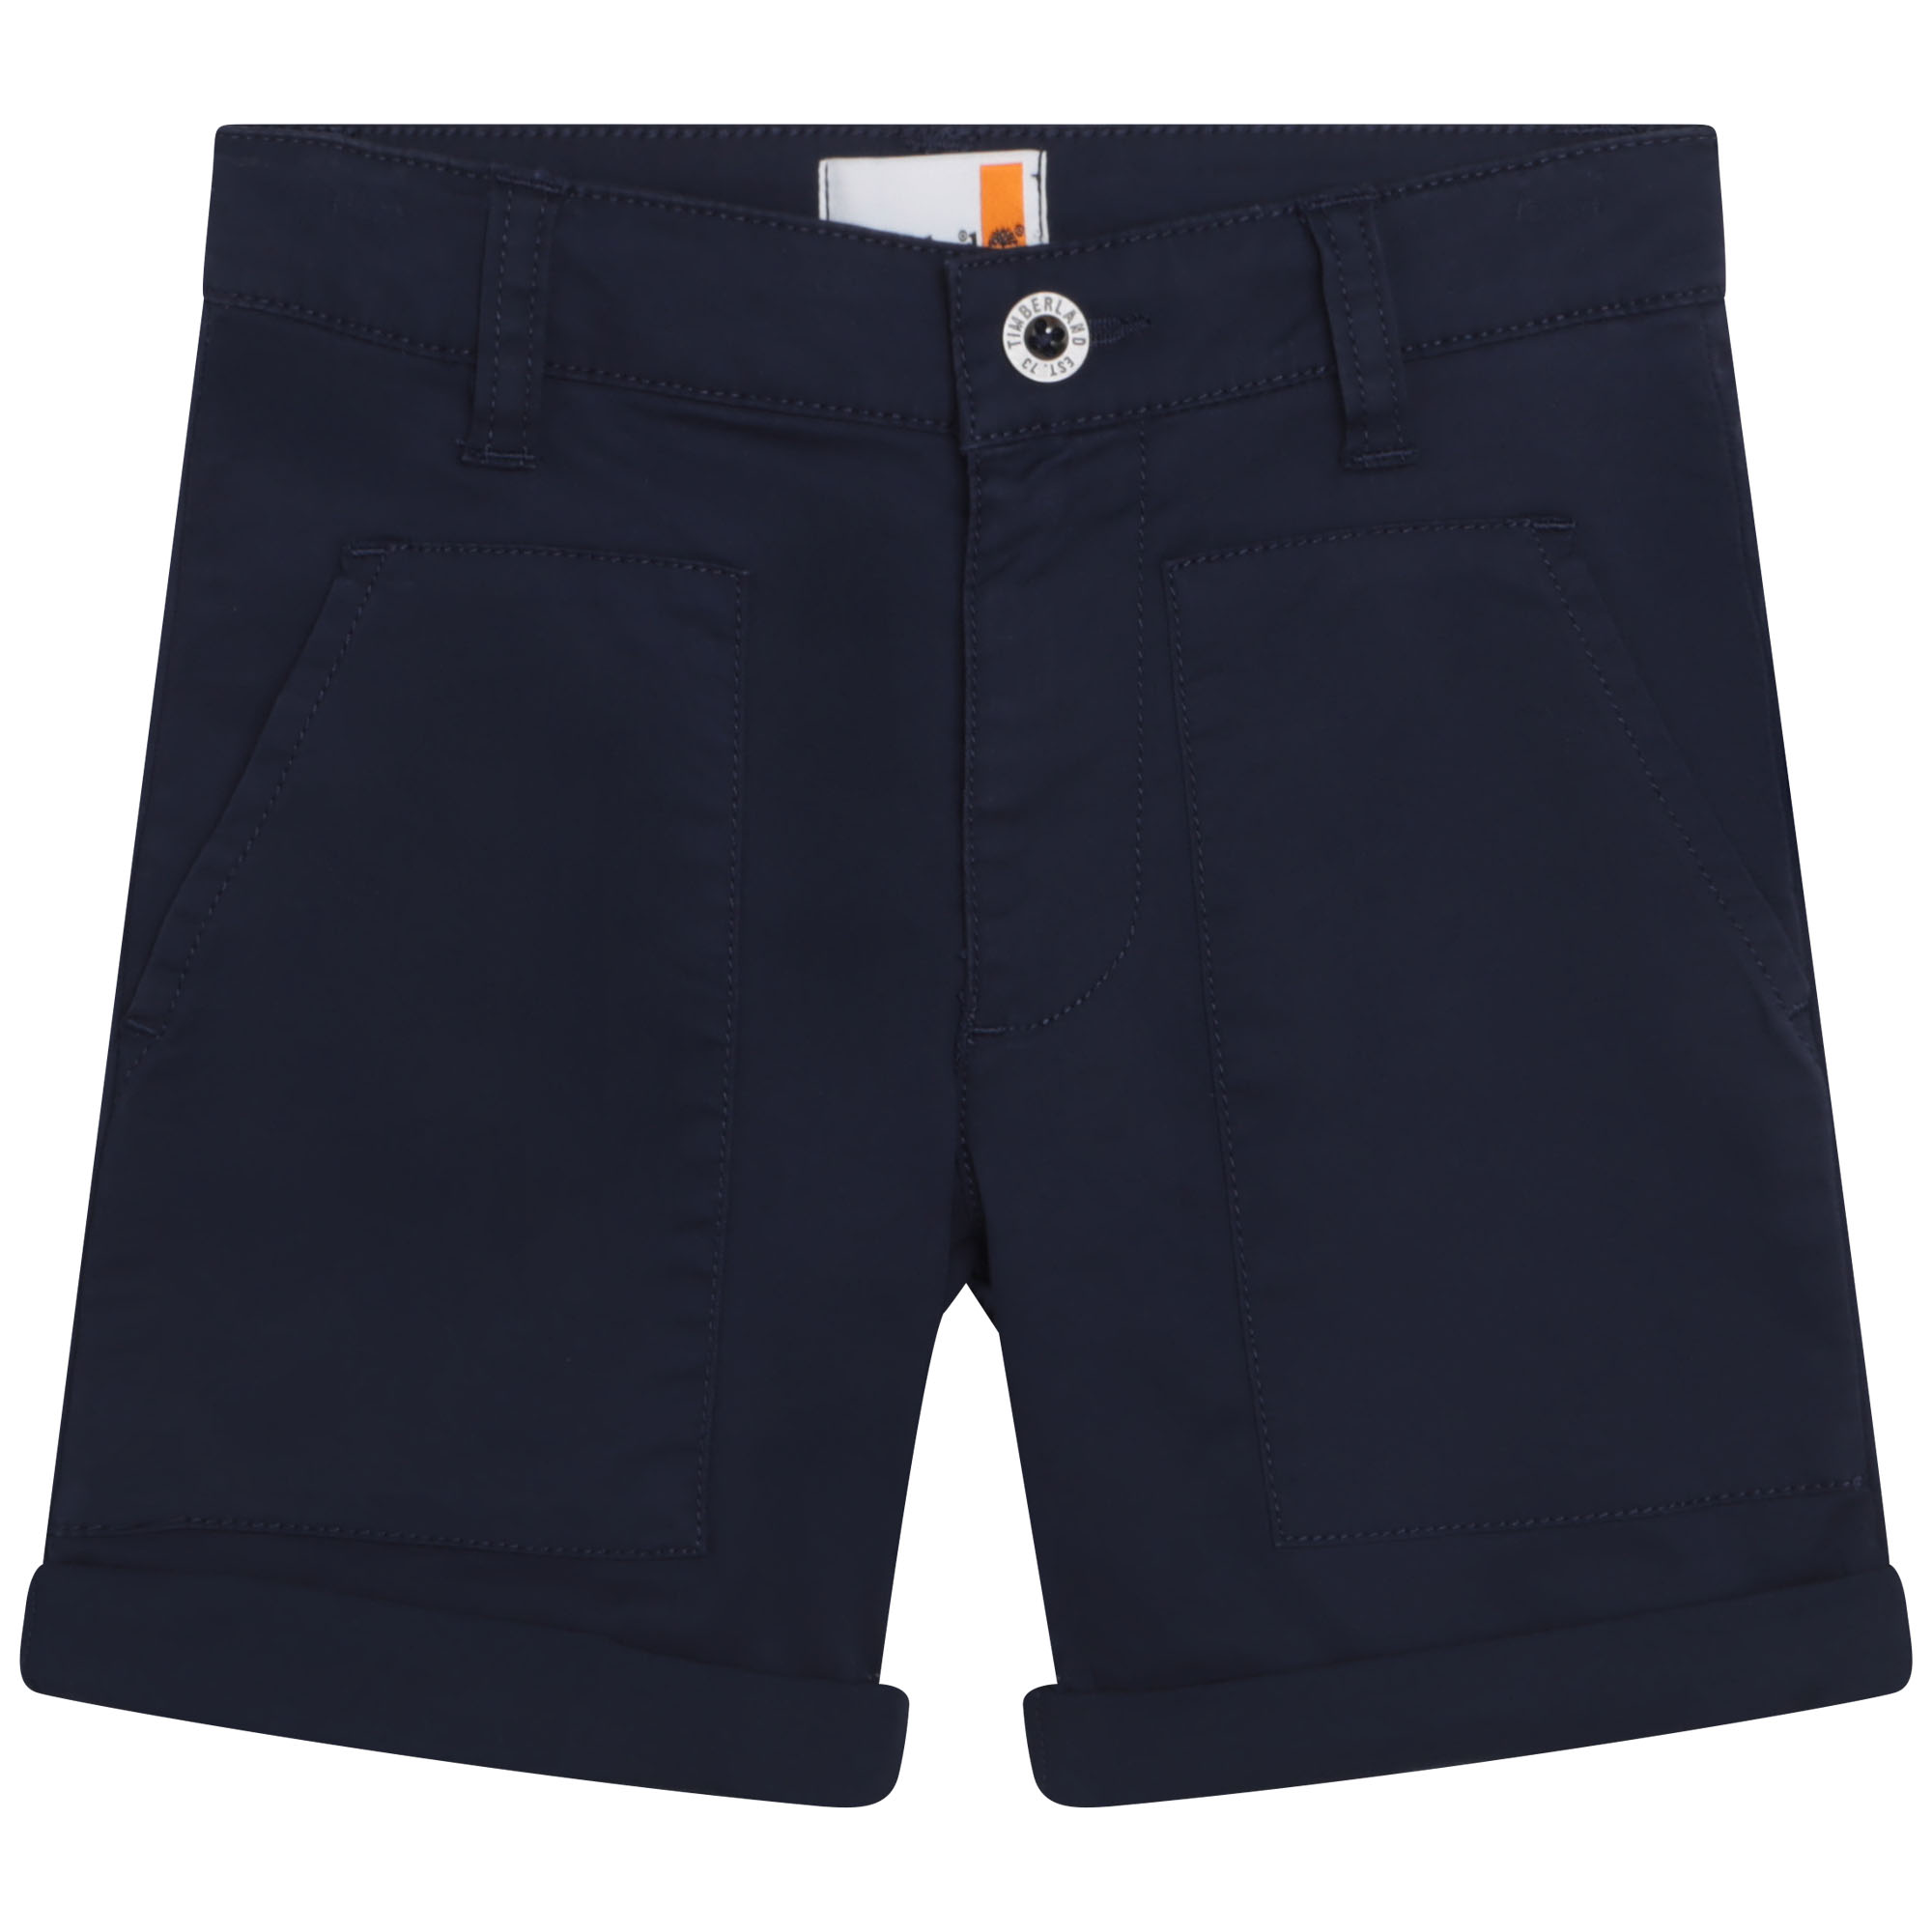 Cotton Bermuda shorts TIMBERLAND for BOY